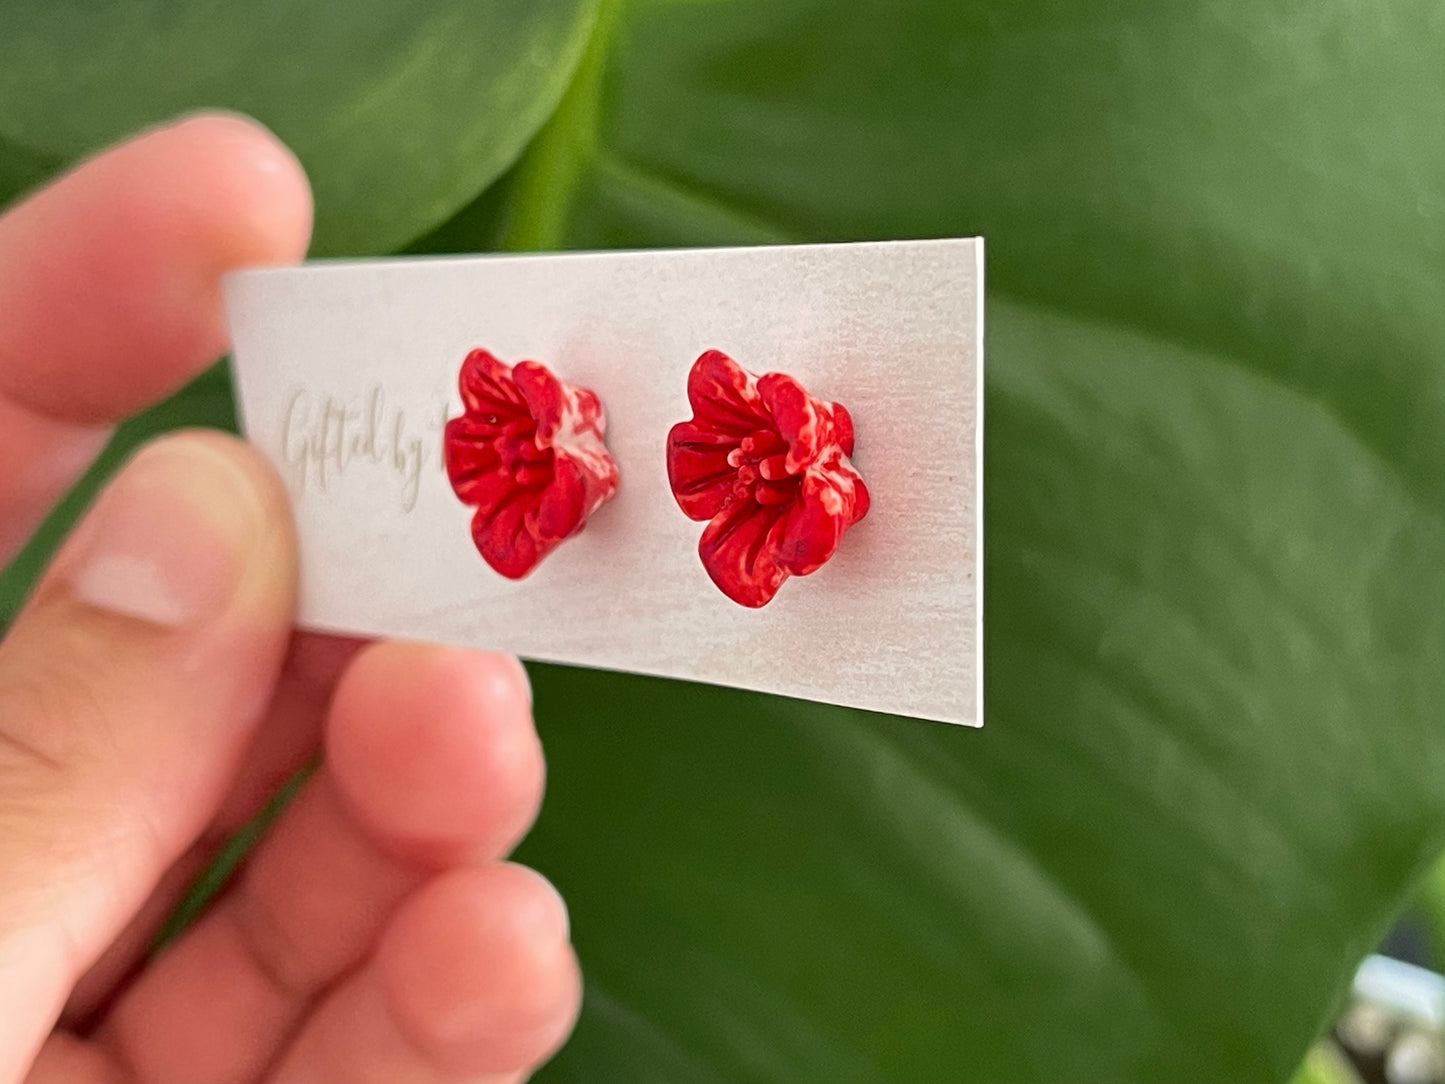 Red flower stud earrings